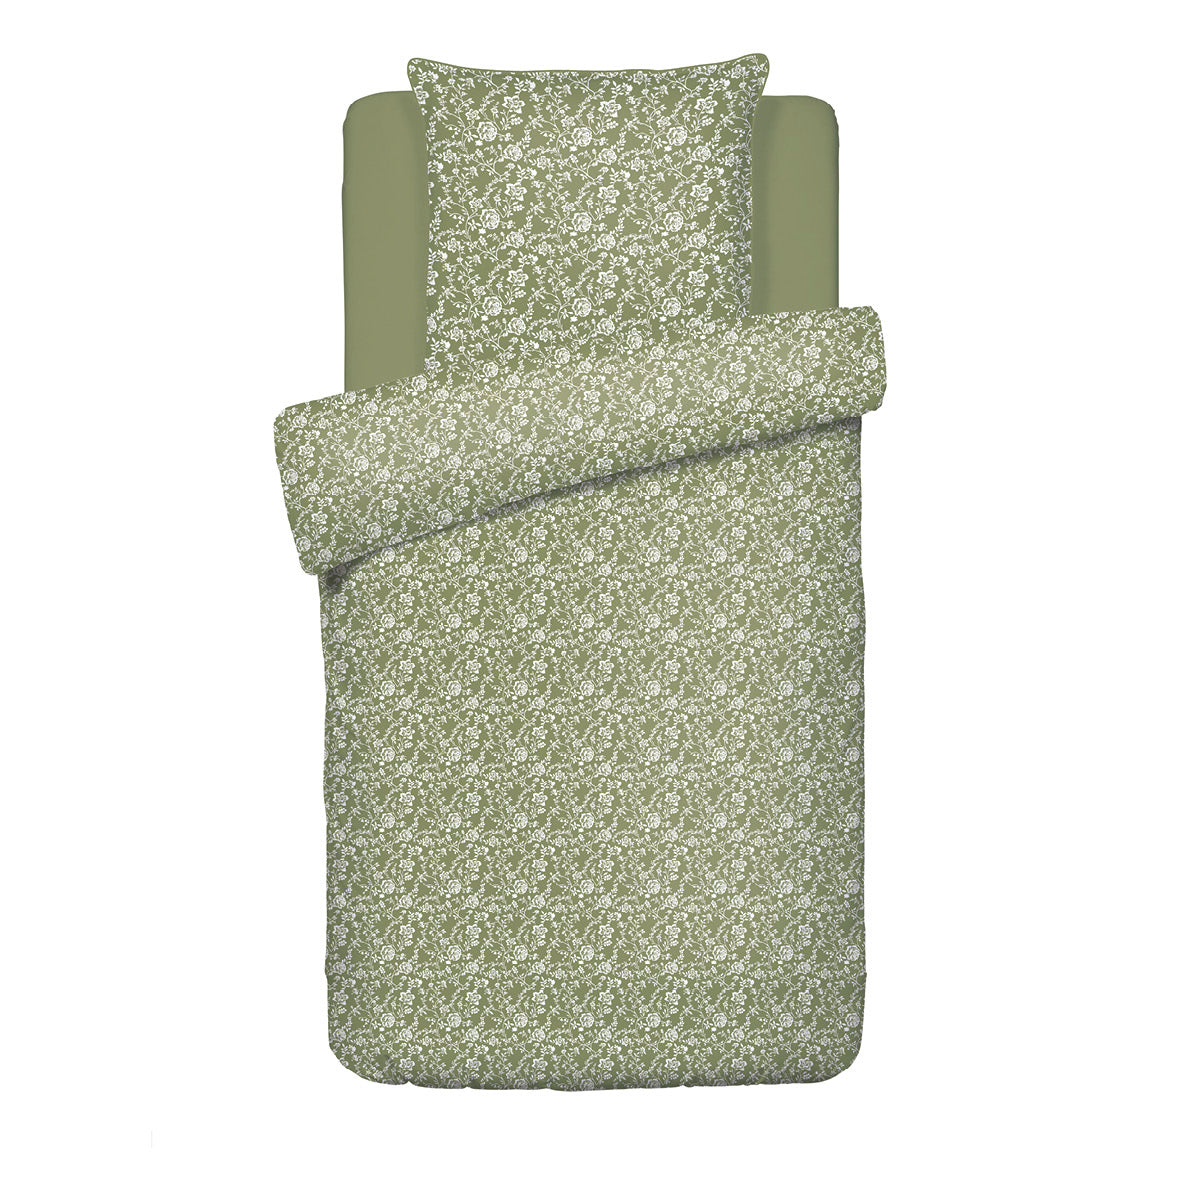 Duvet cover + pillowcase(s) cotton satin - Fleurs Green